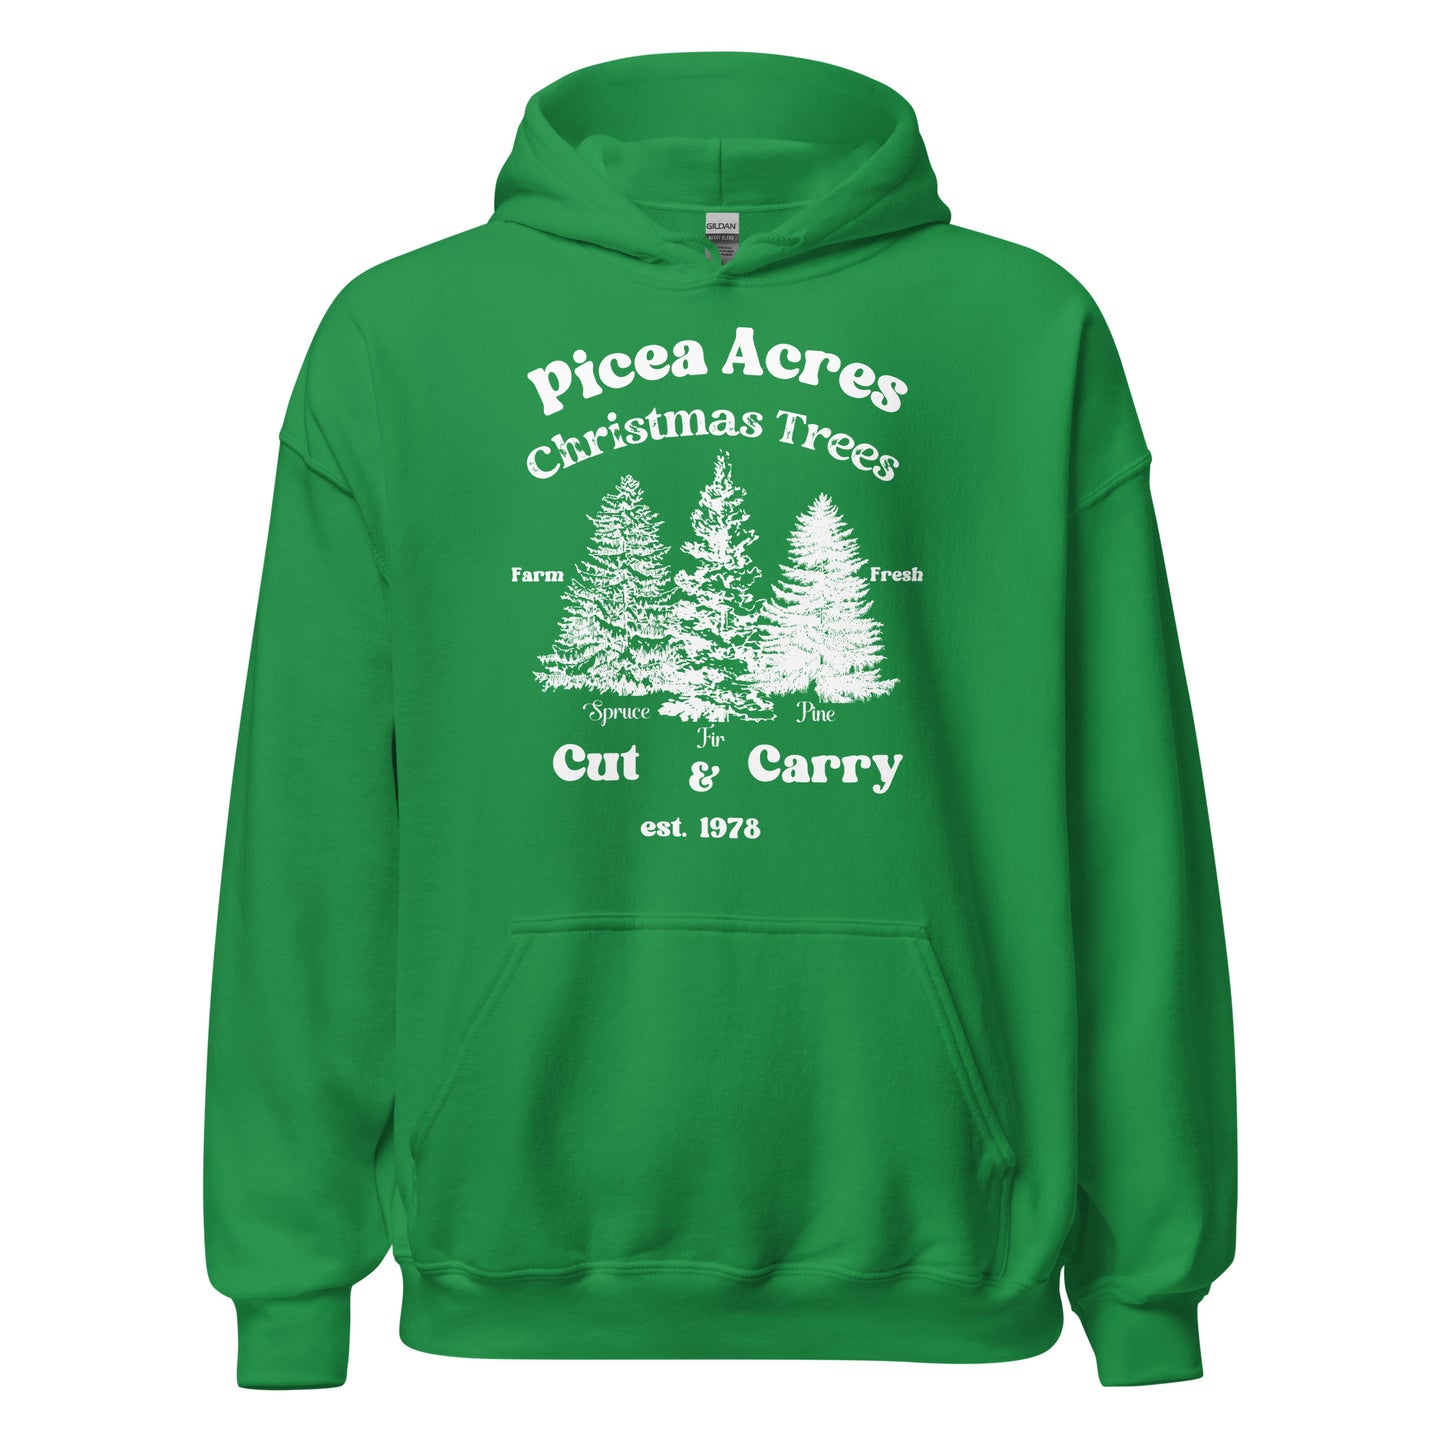 Picea Acres, Christmas Trees, Farm Fresh, Cut & Carry Unisex Hoodie Sweatshirt